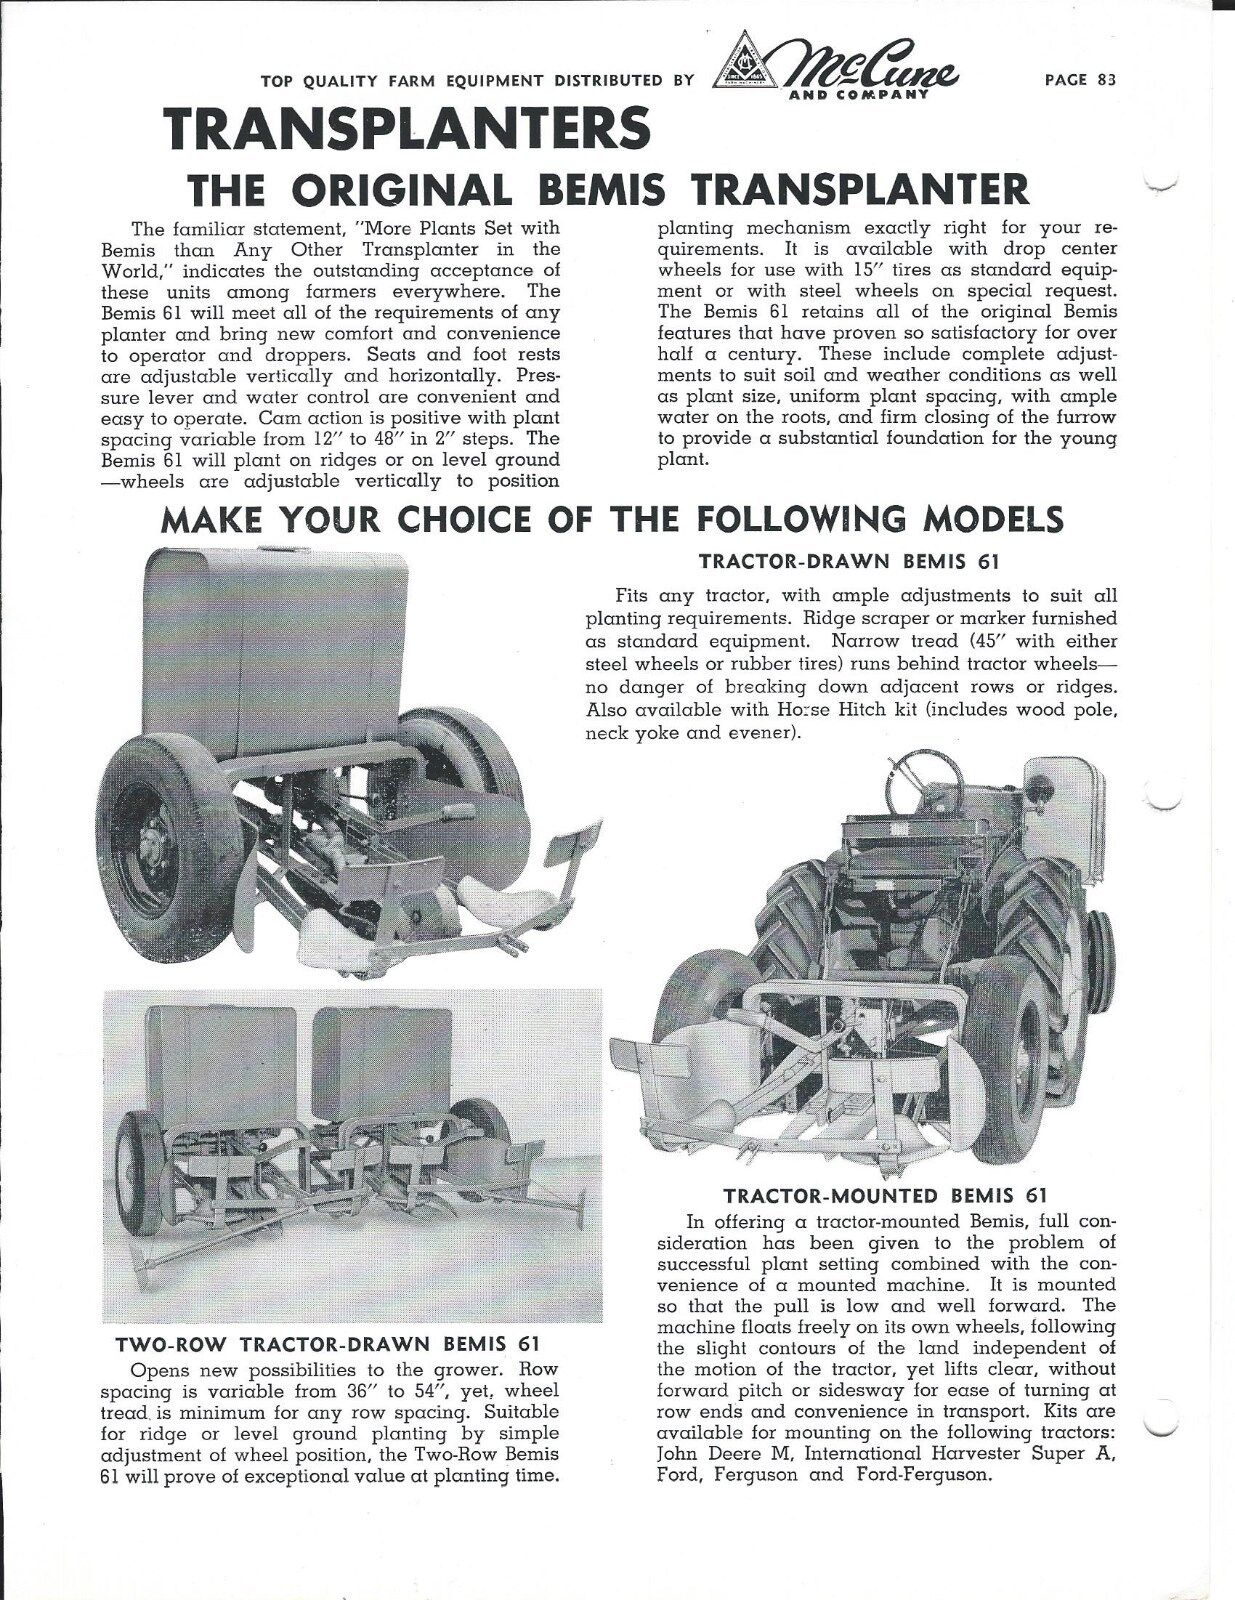 Farm Equipment Brochure - McCune - Bemis Transplanter - Freeman Wagons (F4601)